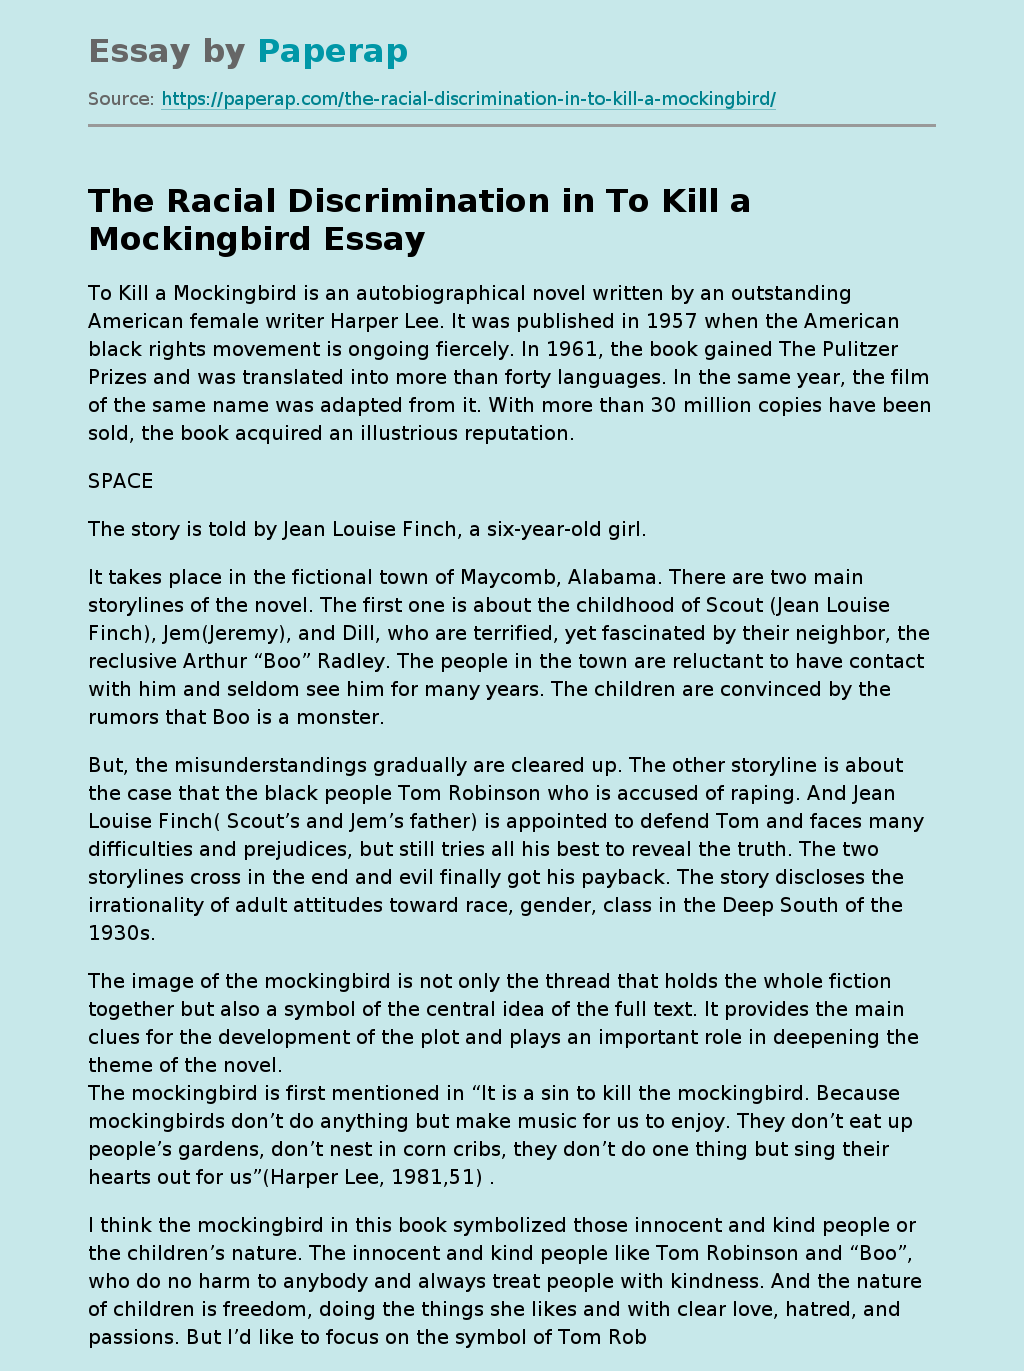 conclusion of discrimination essay